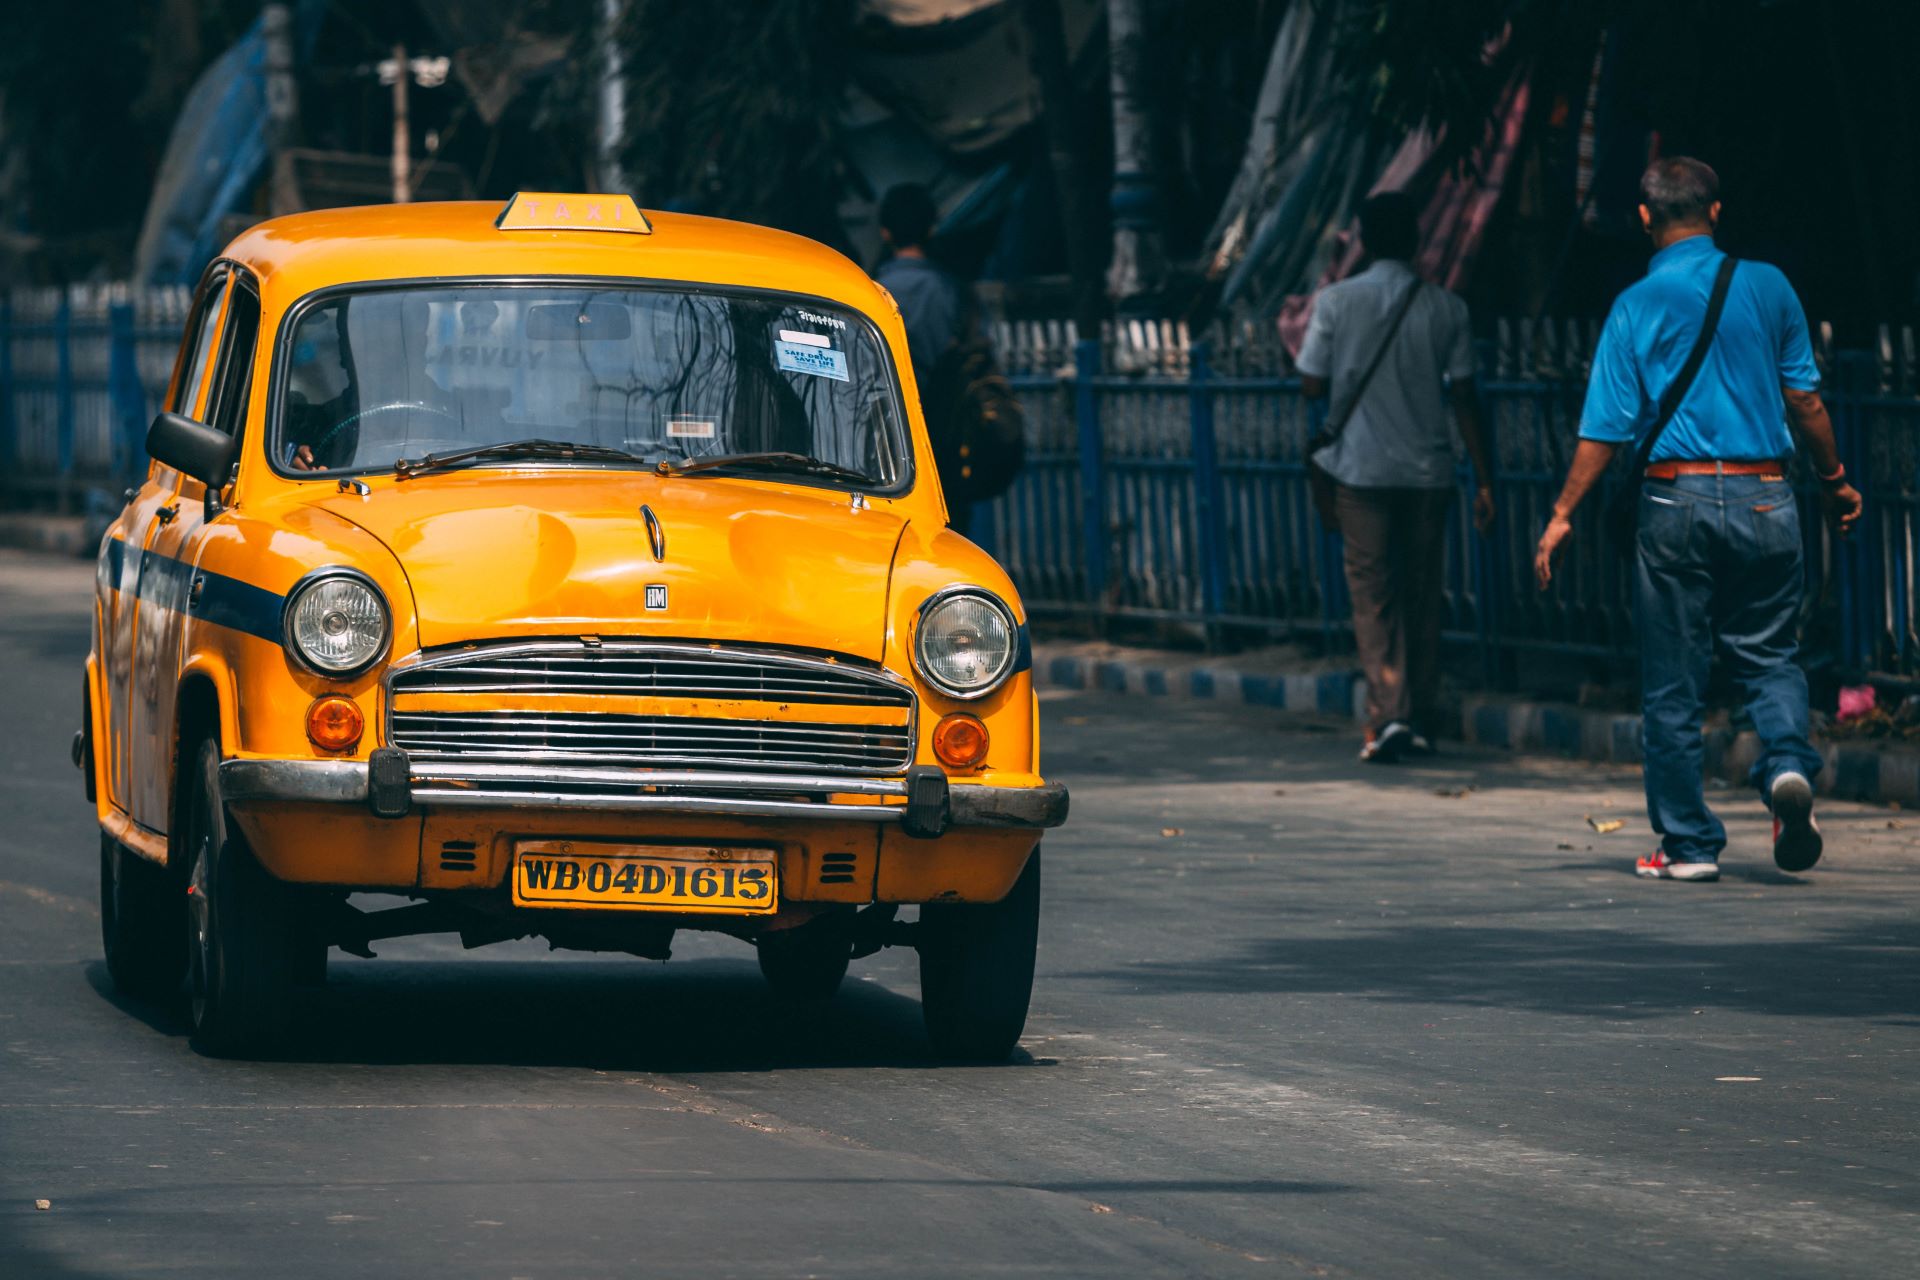 Yellow Taxi in India